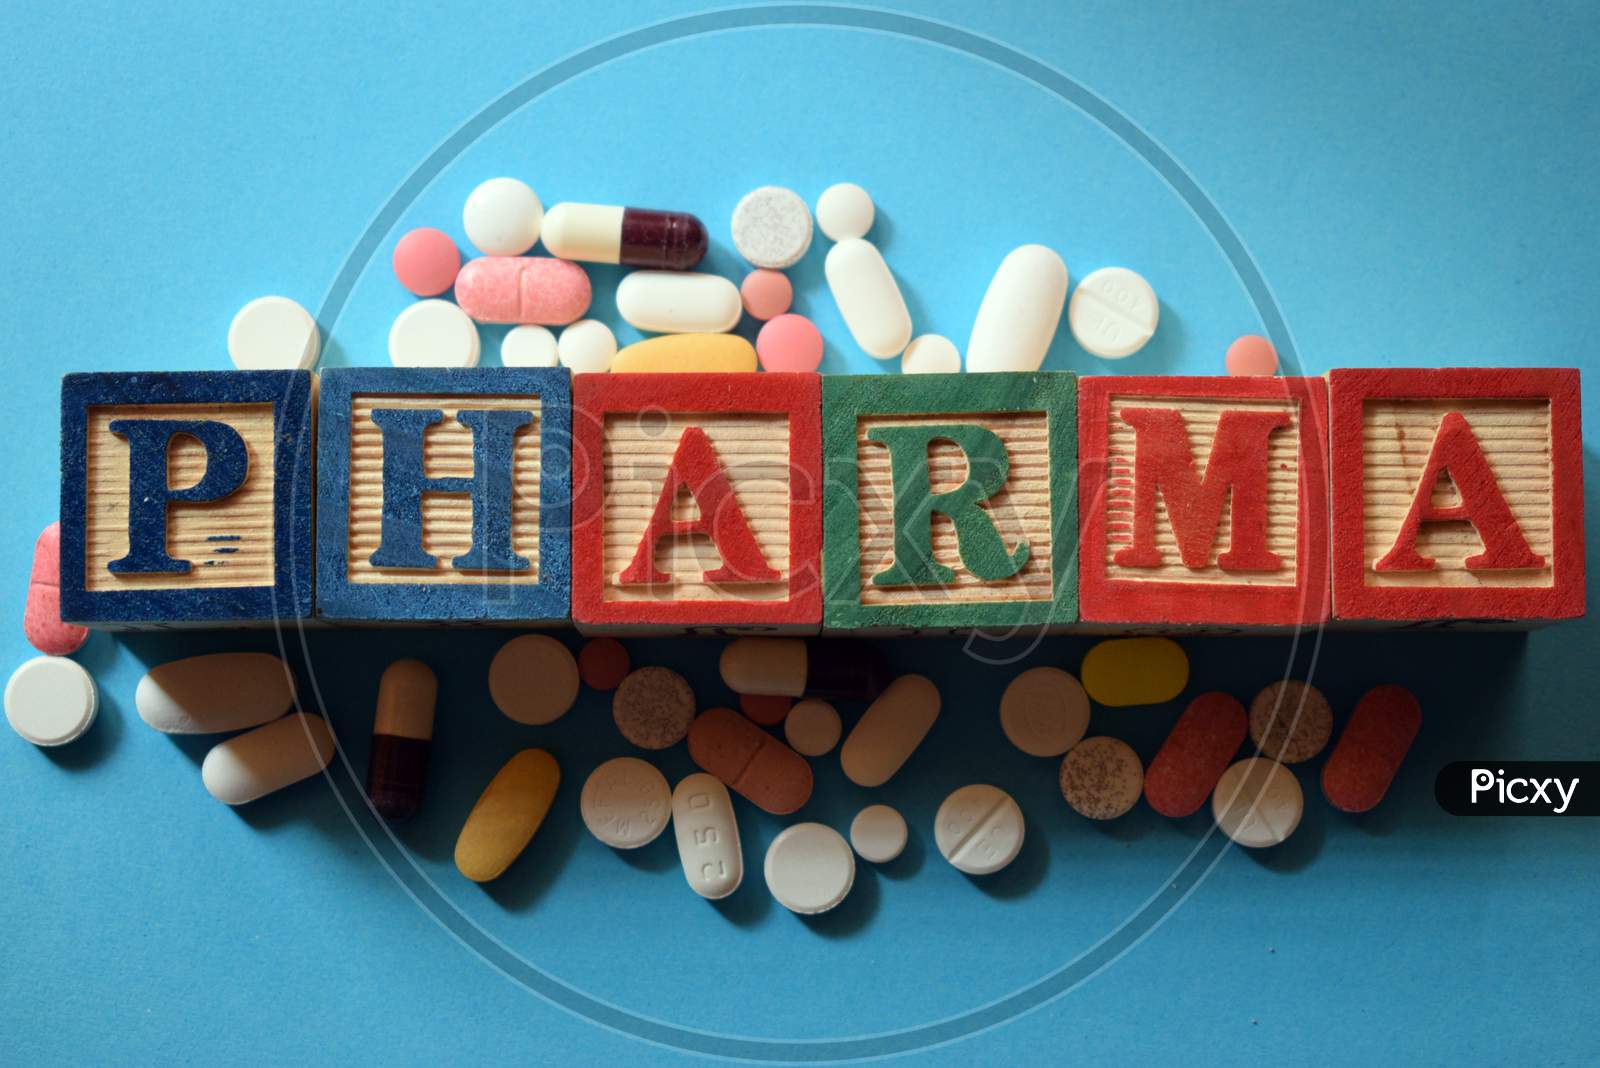 Pharma Text In Wooden Block